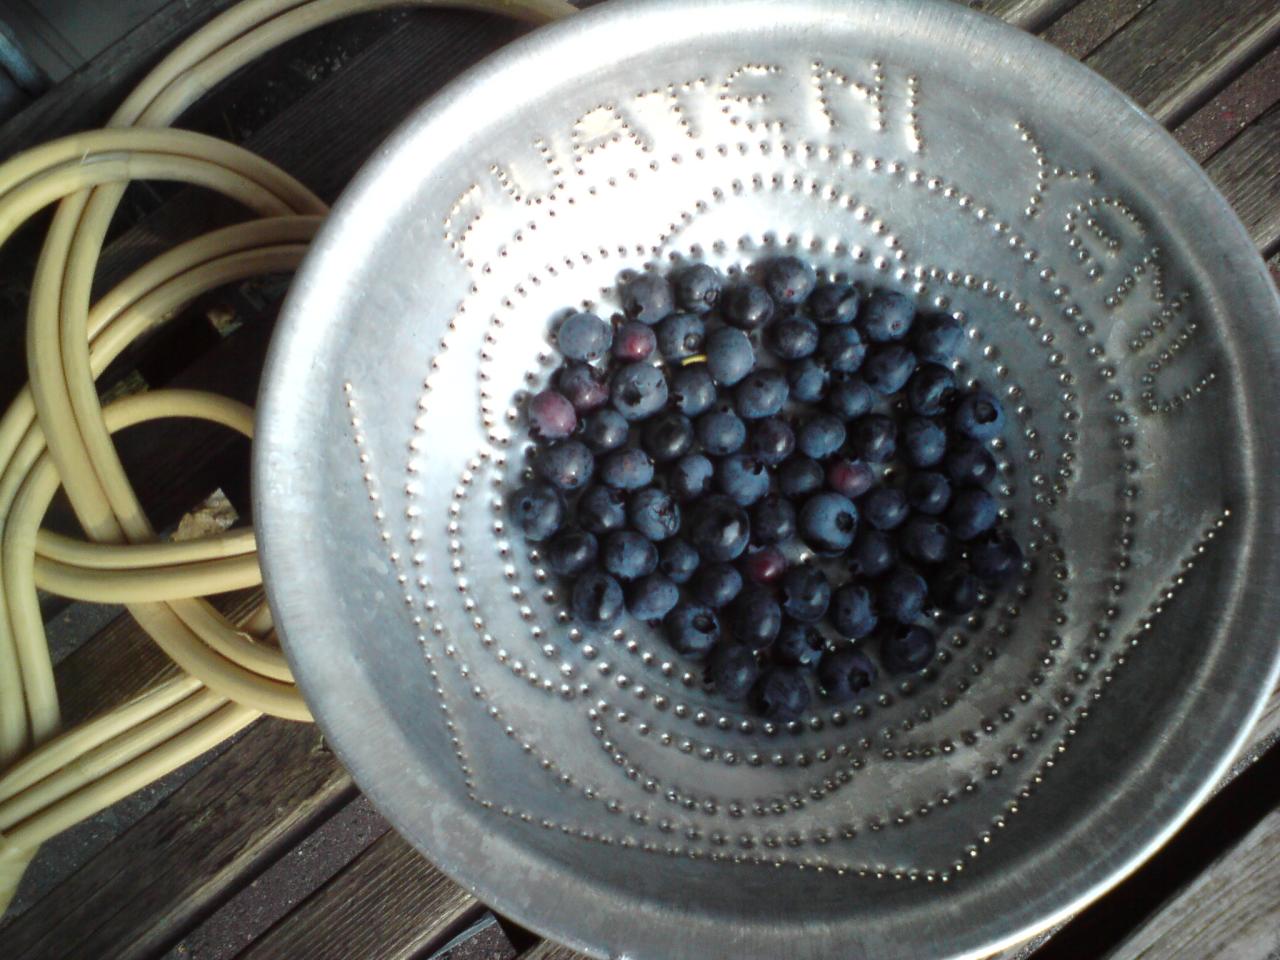 Blueberries from the garden